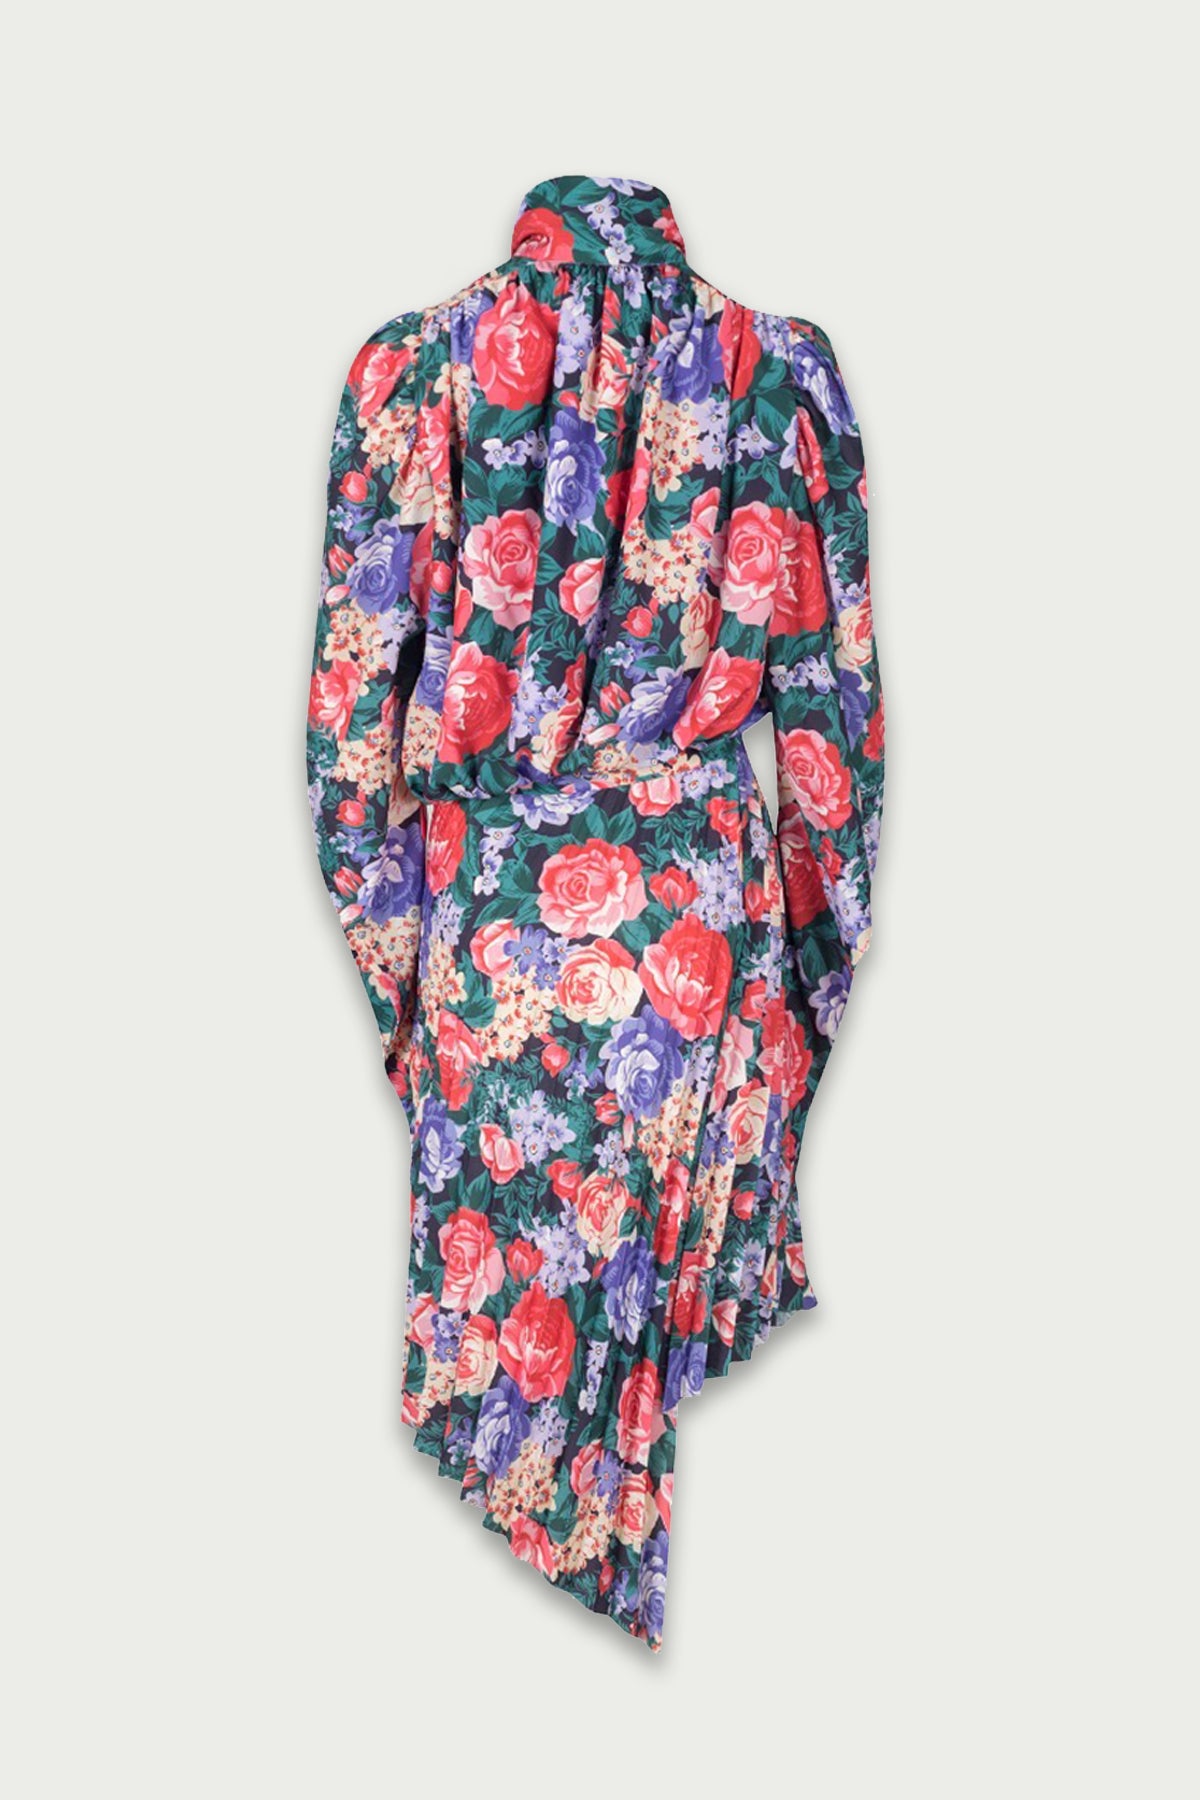 Mukzin | Vintage Print Flower Dress - Seeking Fairyland